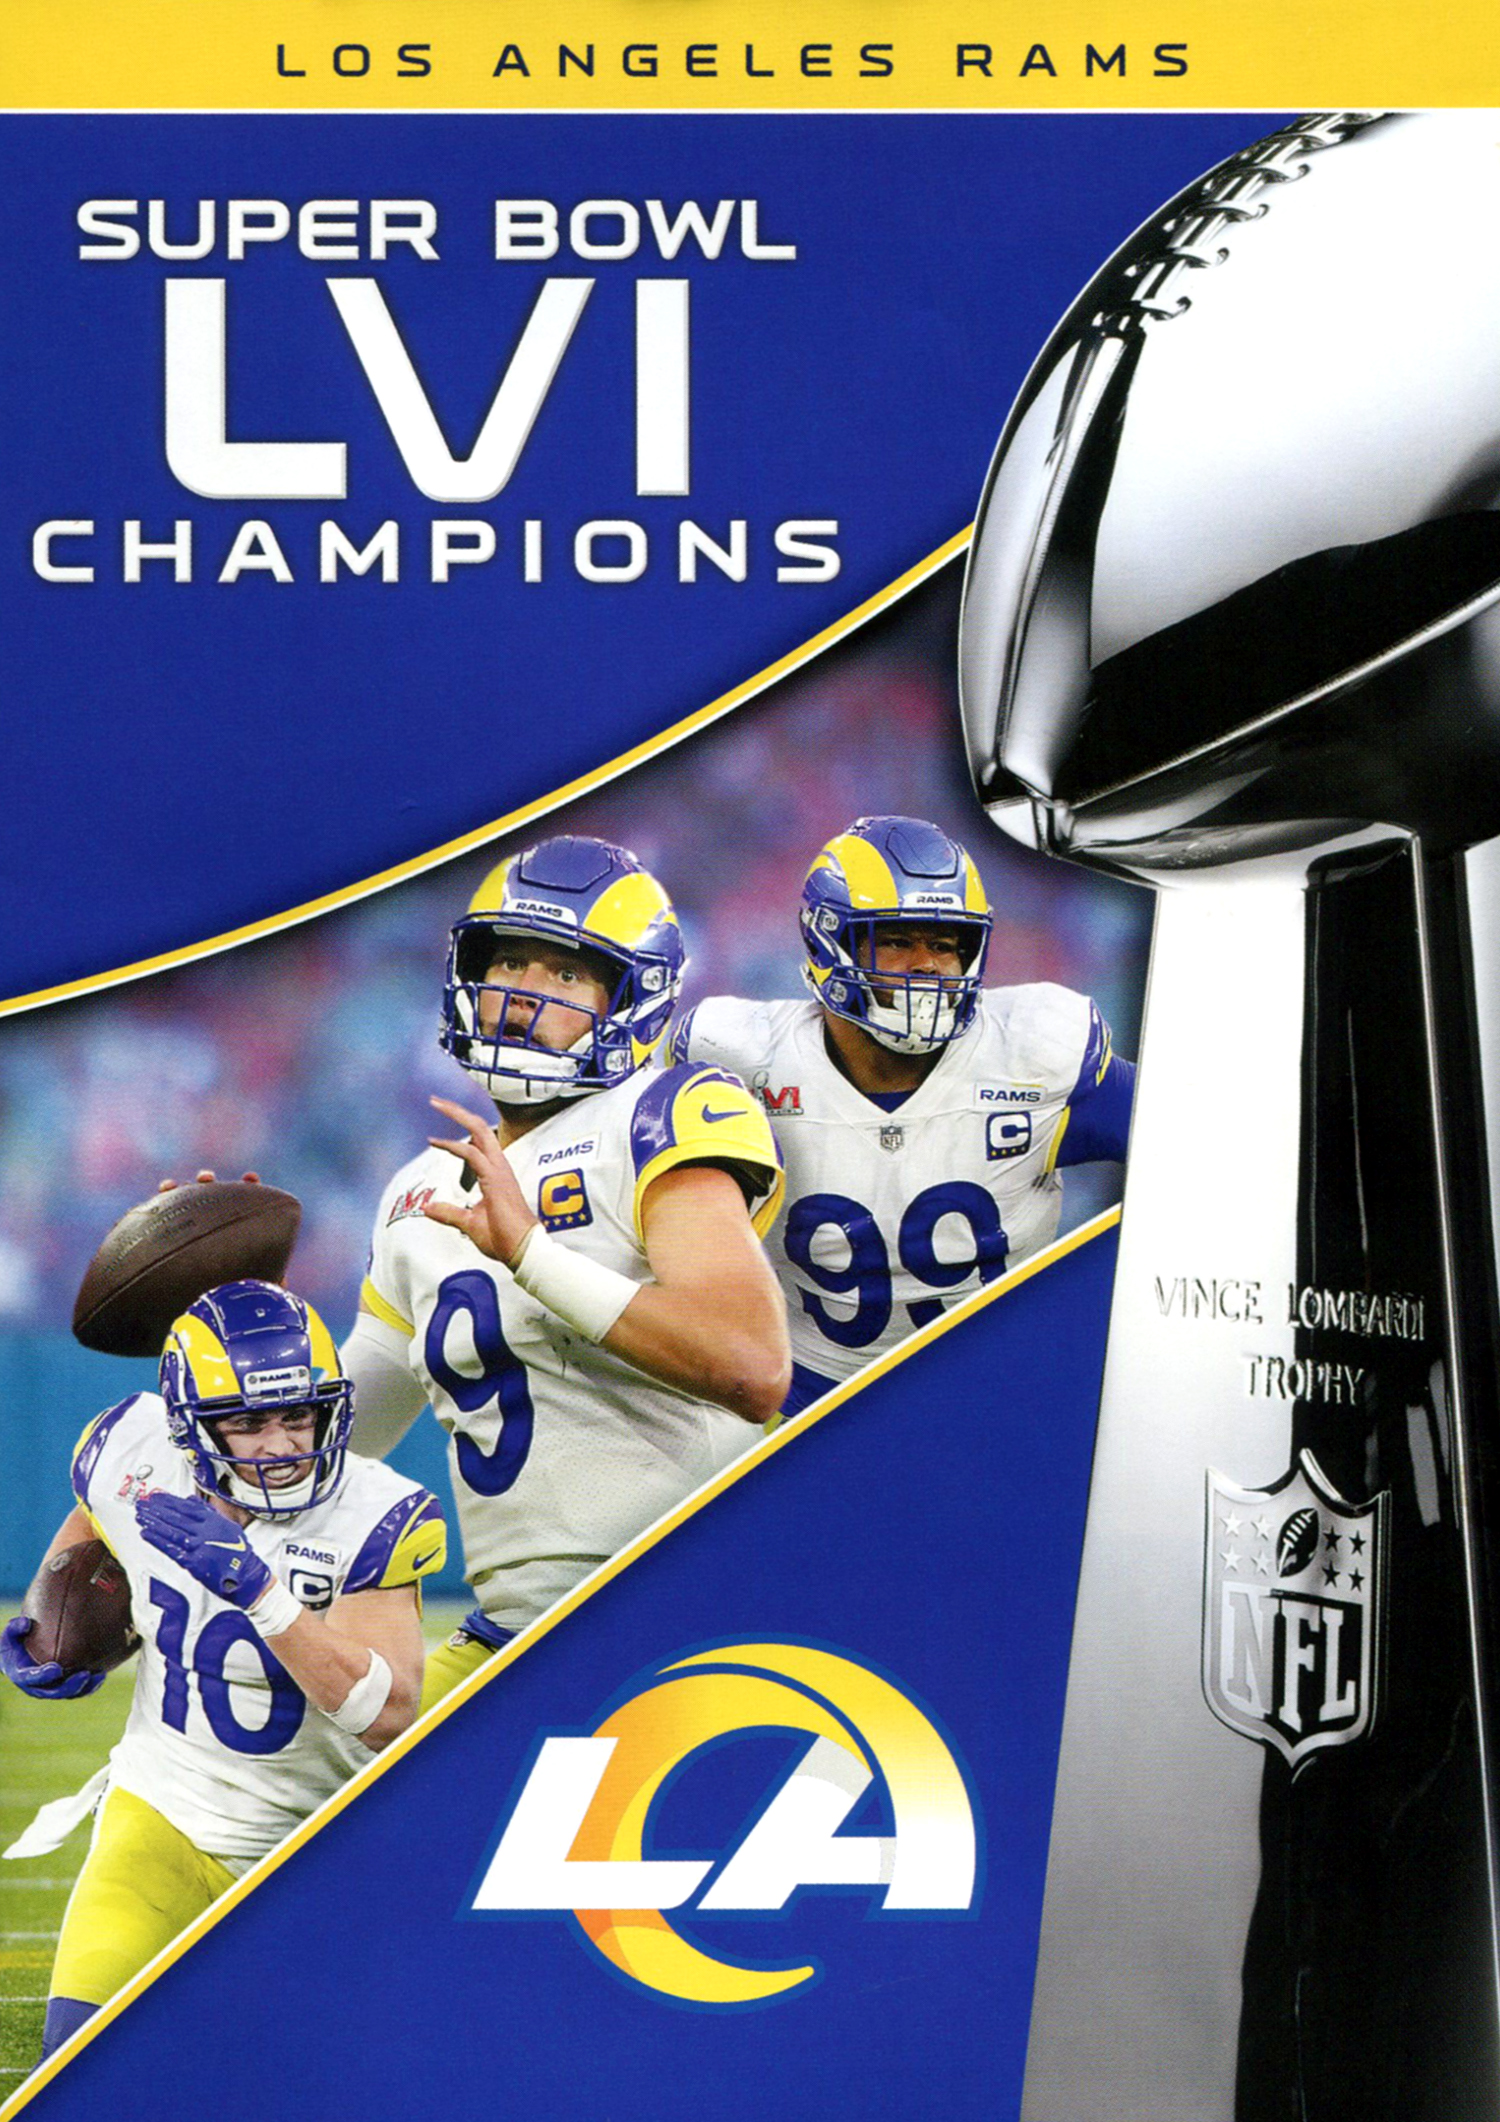 

NFL: Super Bowl LVI Champions - Los Angeles Rams